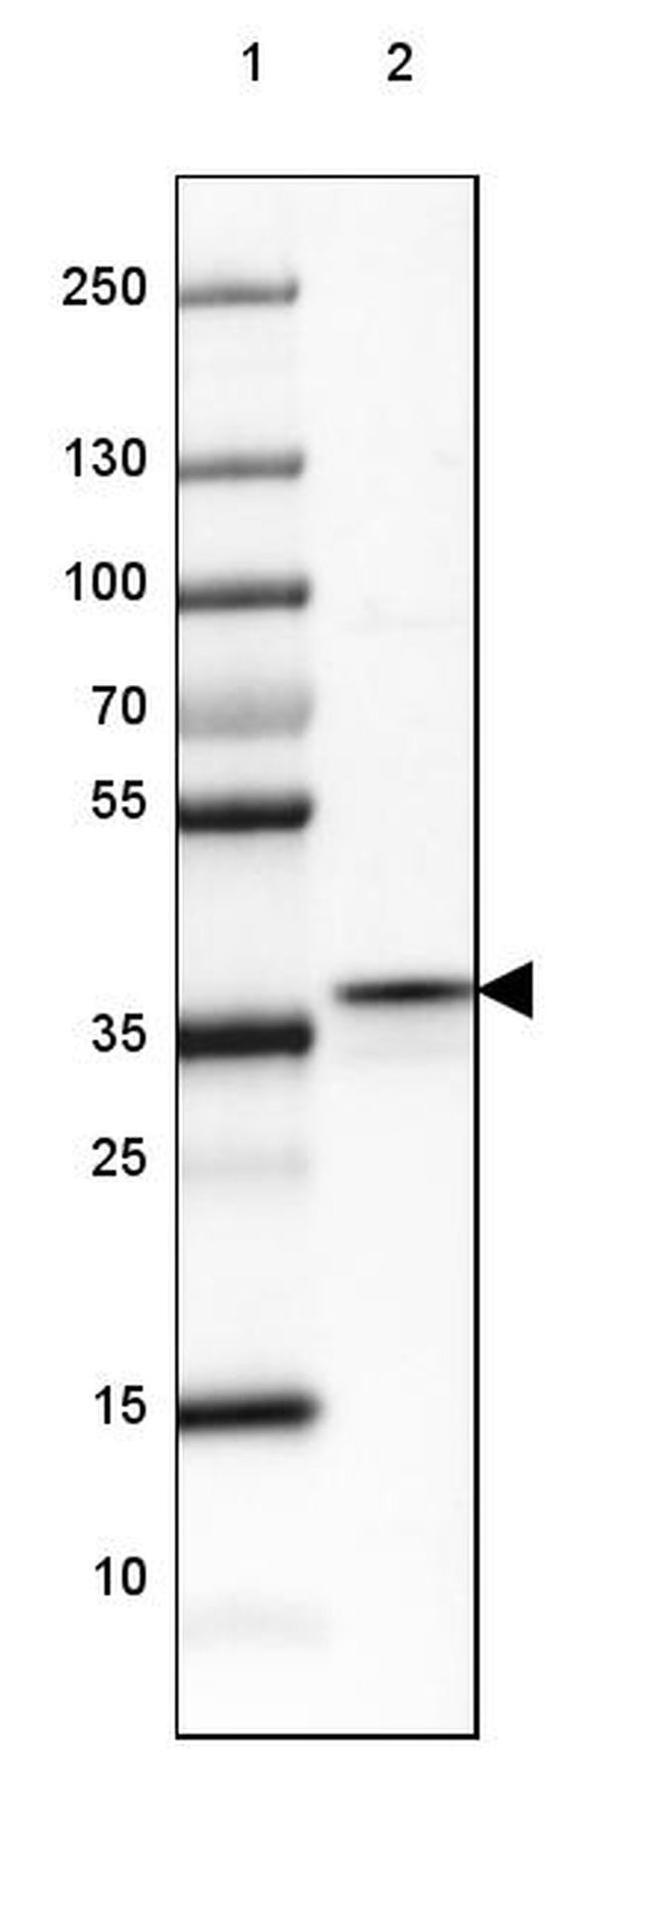 FBP1/FBP2 Antibody in Western Blot (WB)